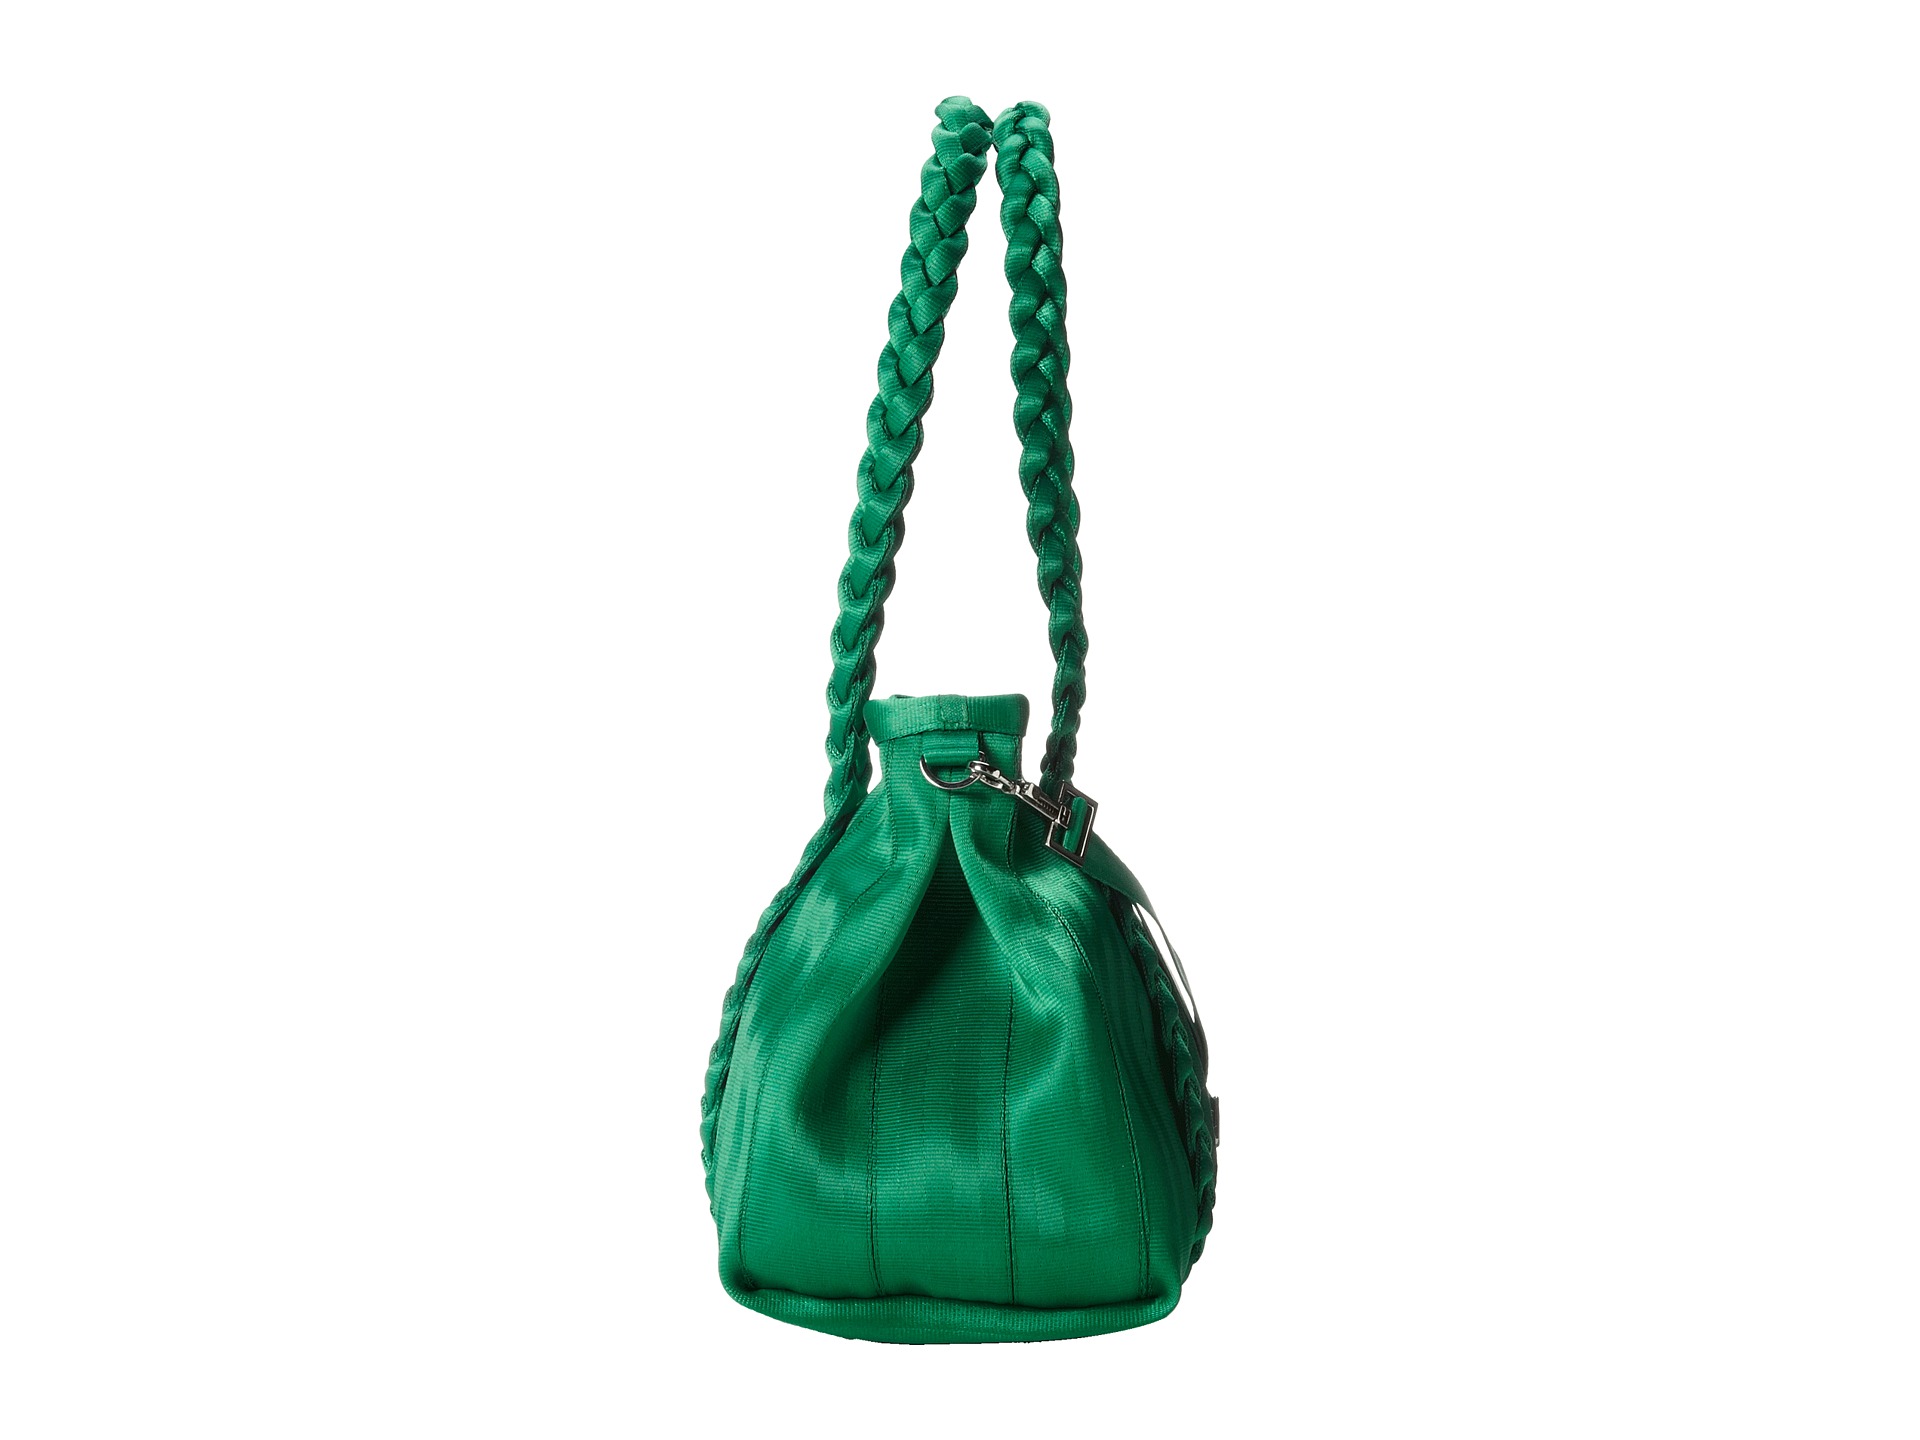 Harveys Seatbelt Bag Sophia Tote Kelly Green | Shipped Free at Zappos